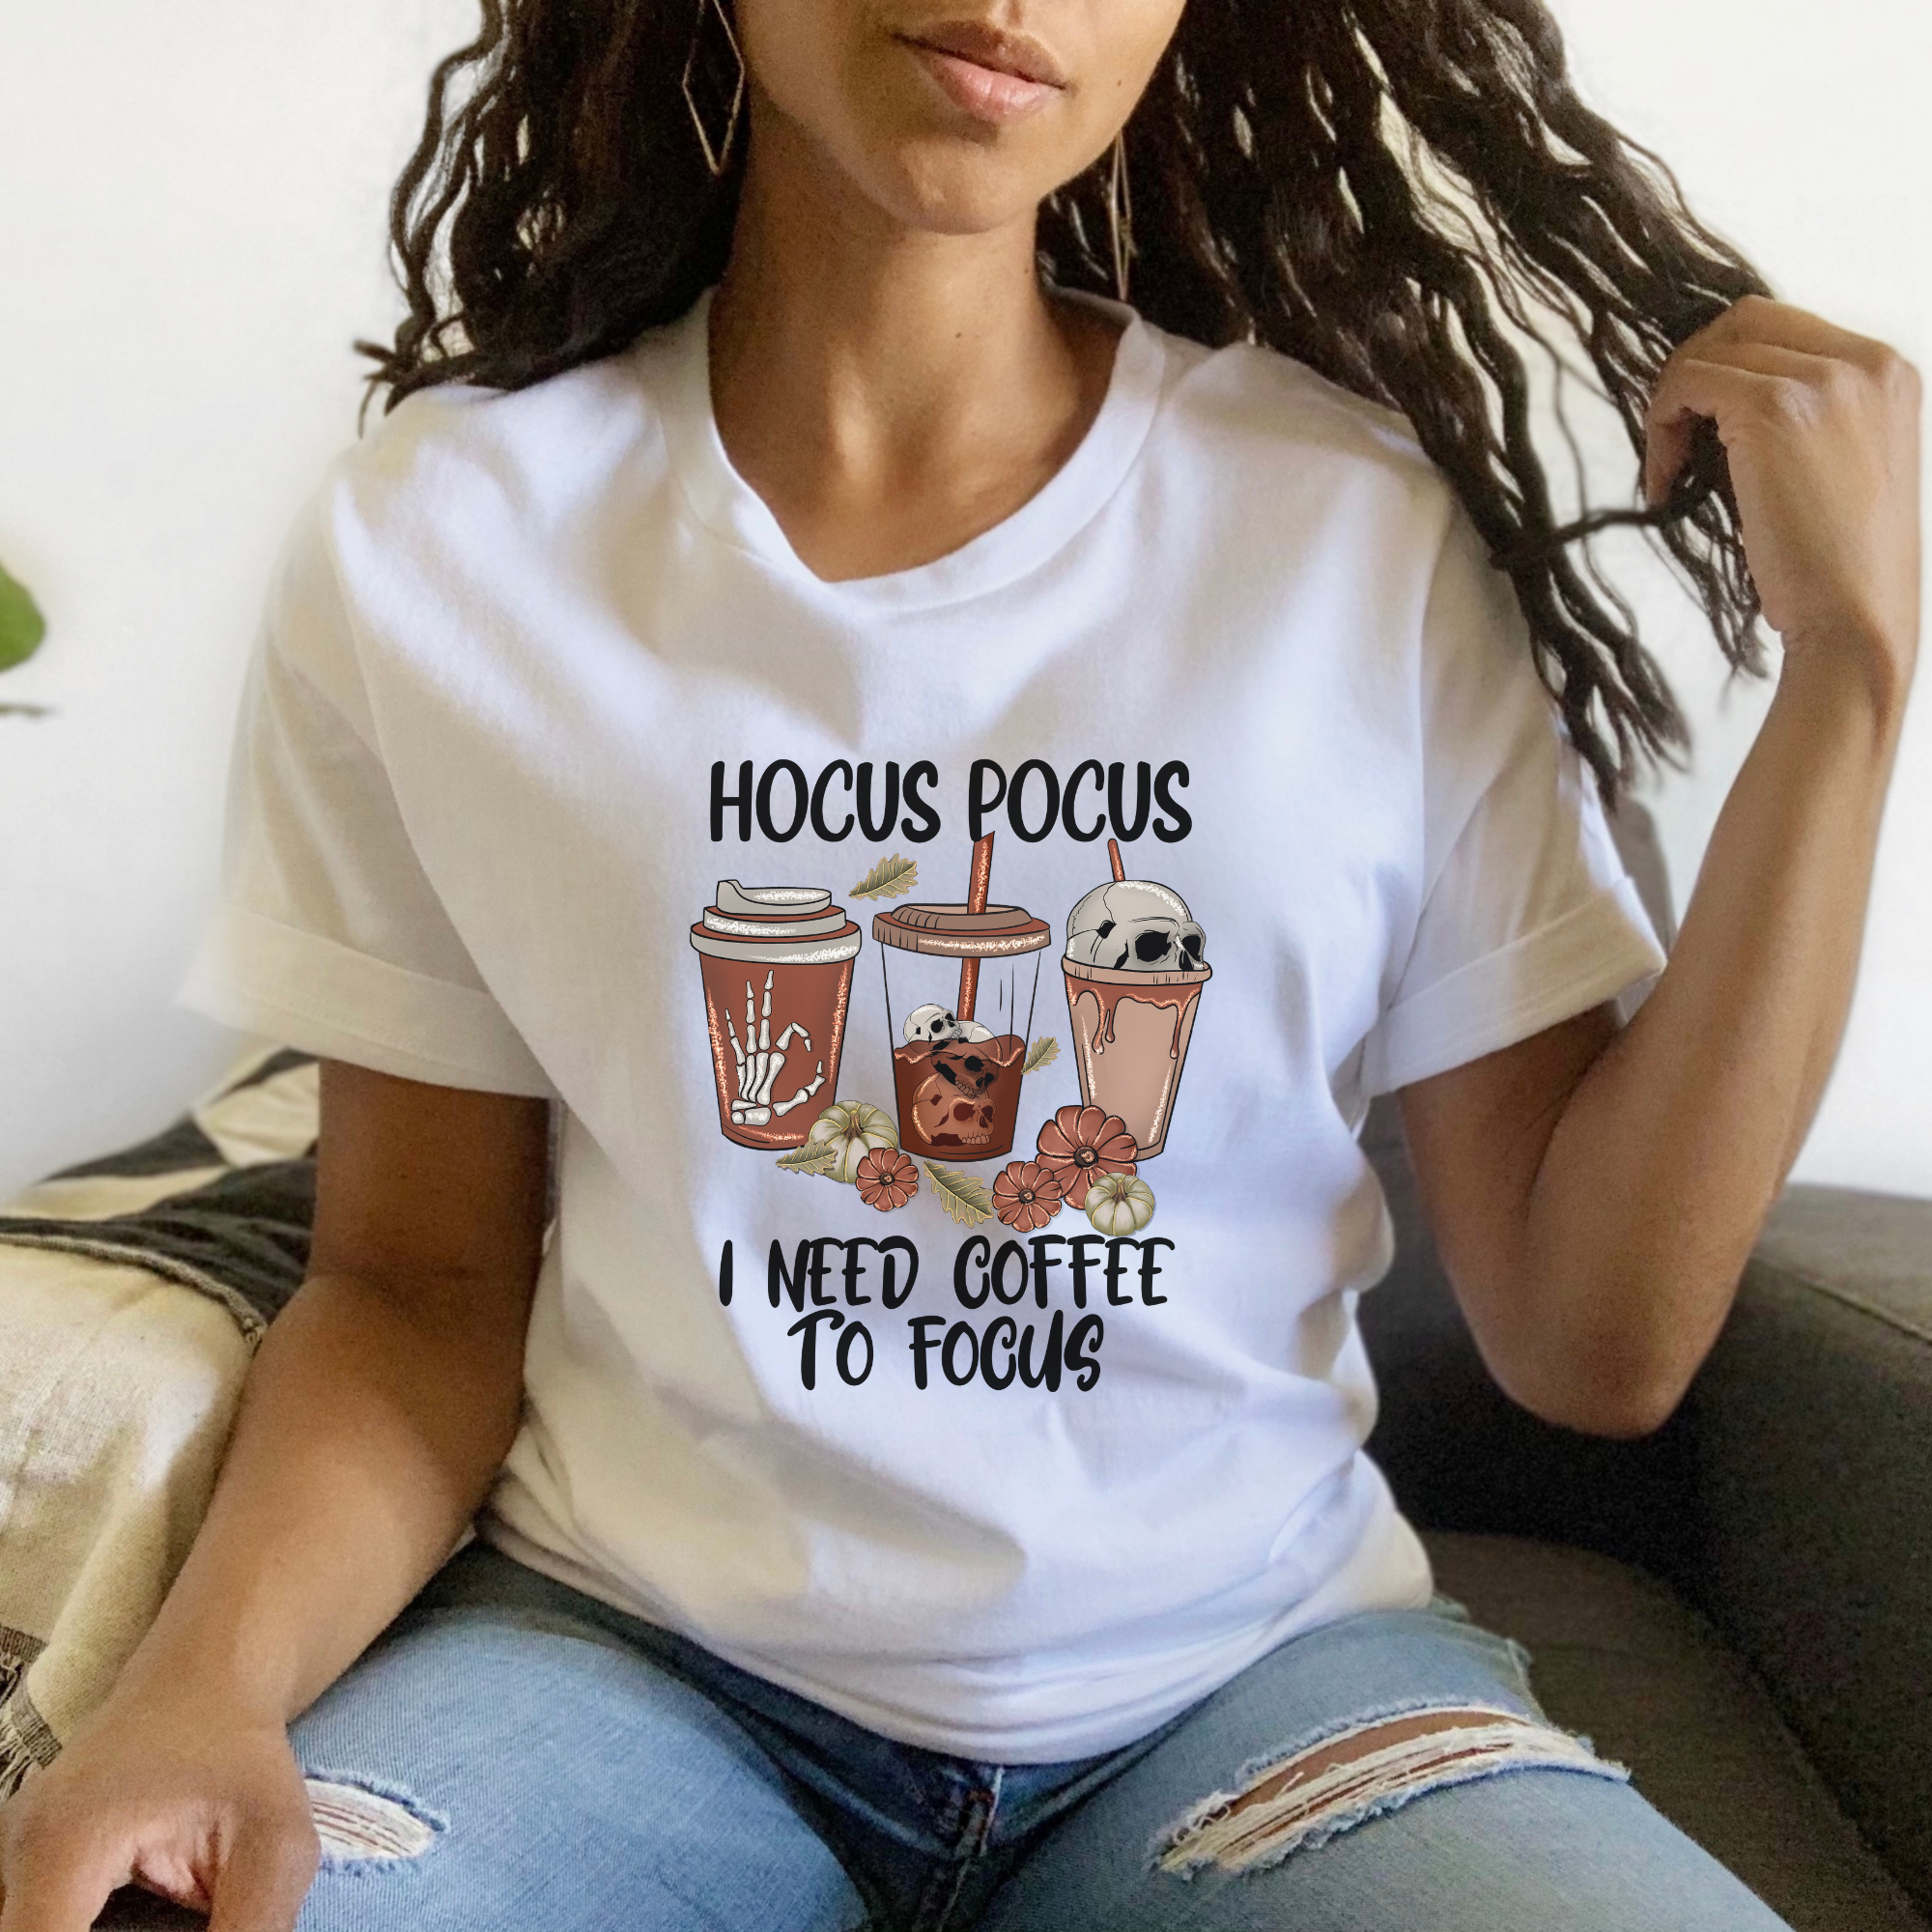 Hocus Pocus T Shirt, Hocus Pocus Halloween Shirt, Coffee T Shirt, Halloween Shirt For Woman, Halloween T Shirt